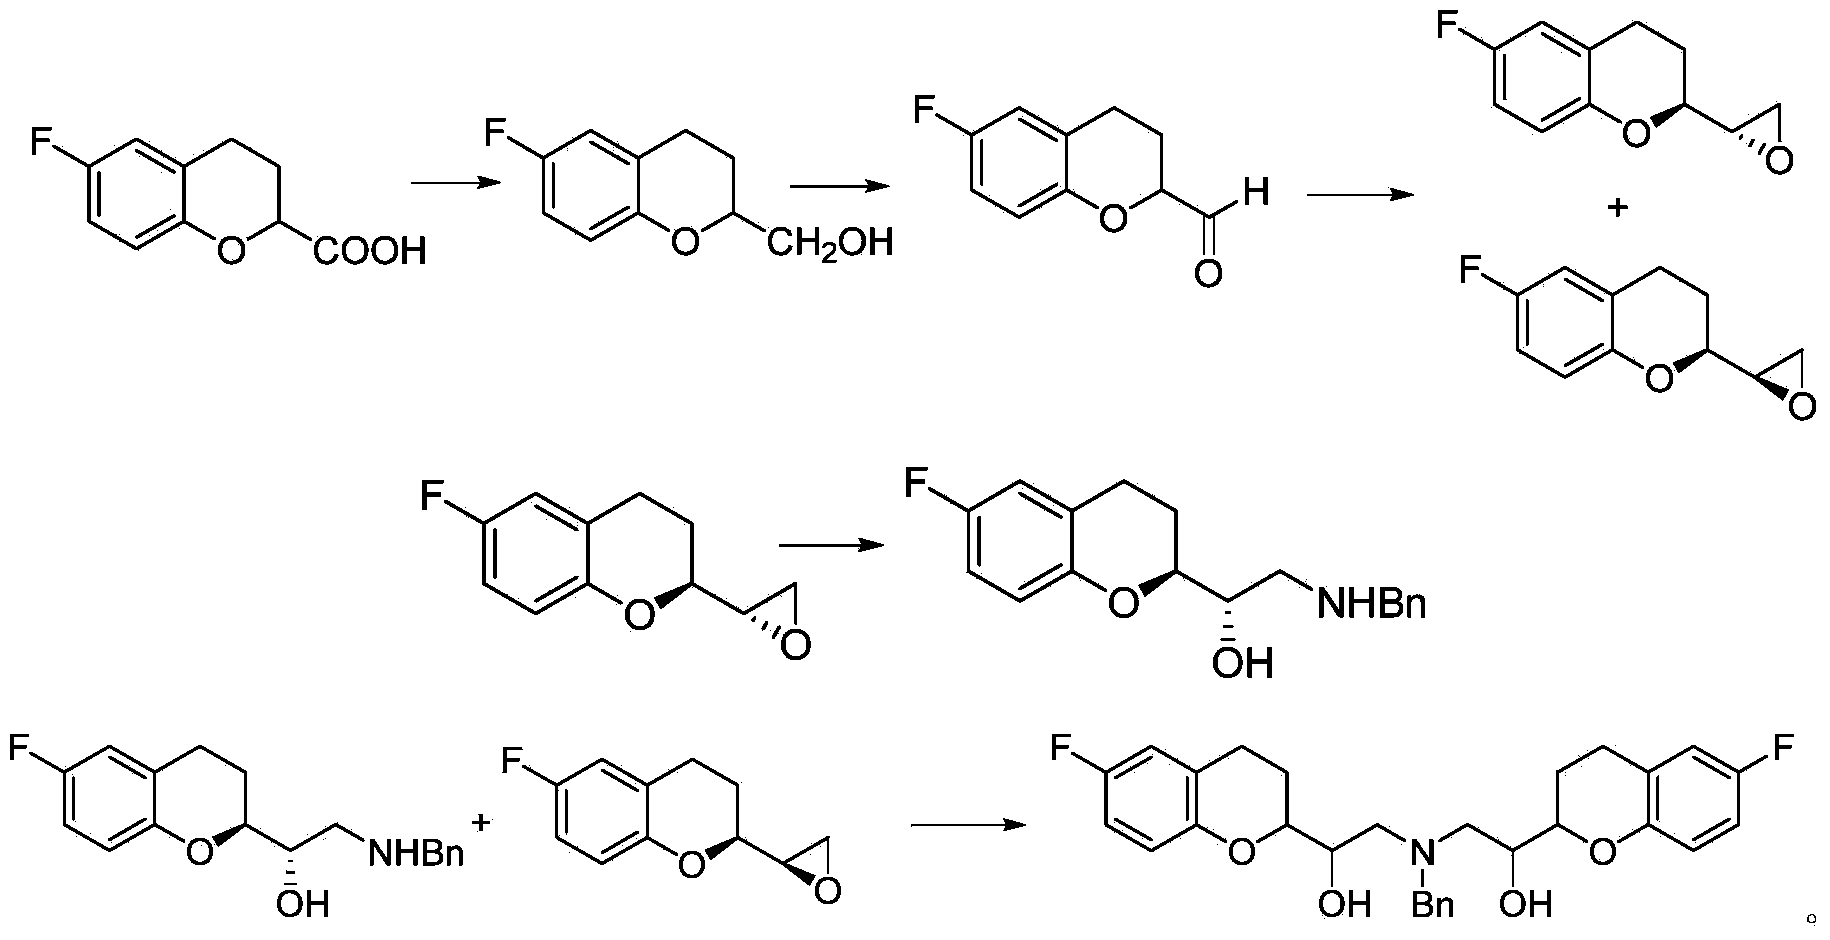 Synthetic method of nebivolol